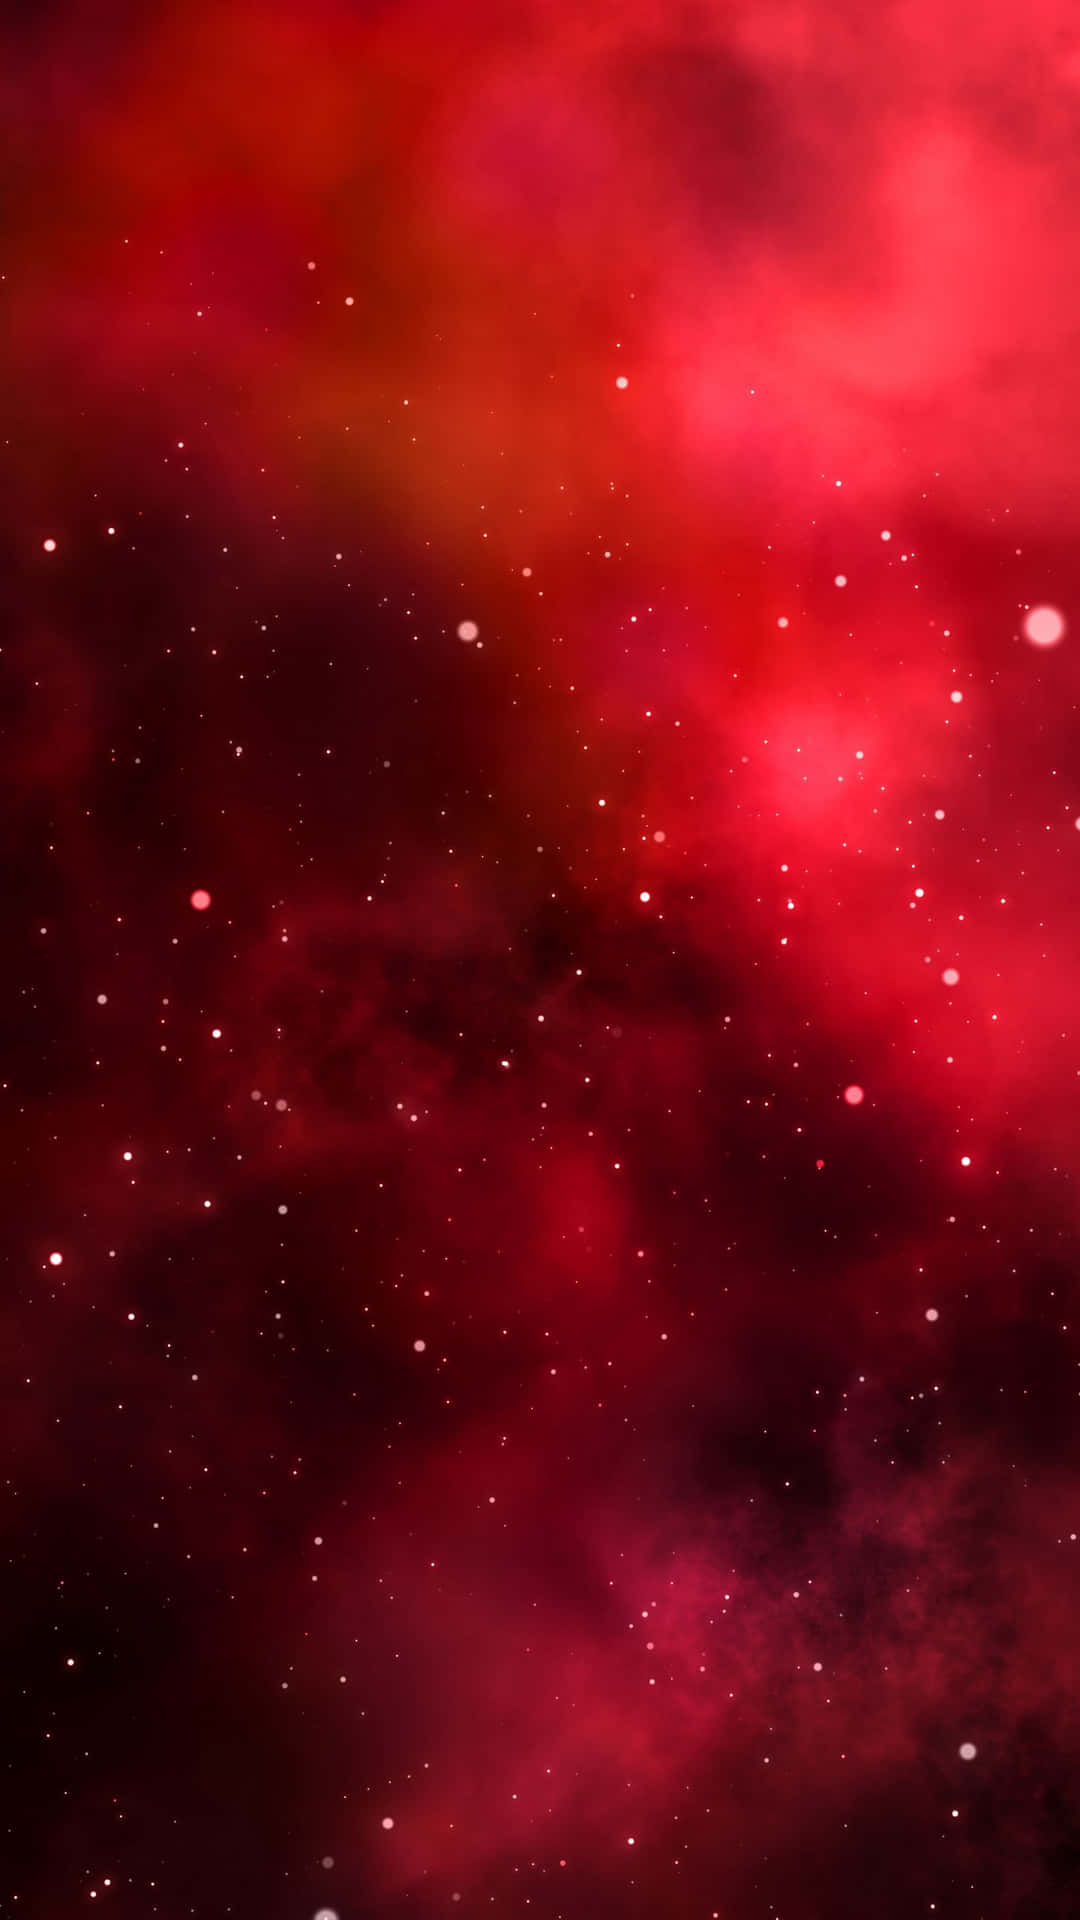 Brilliant Red Galaxy of Stars